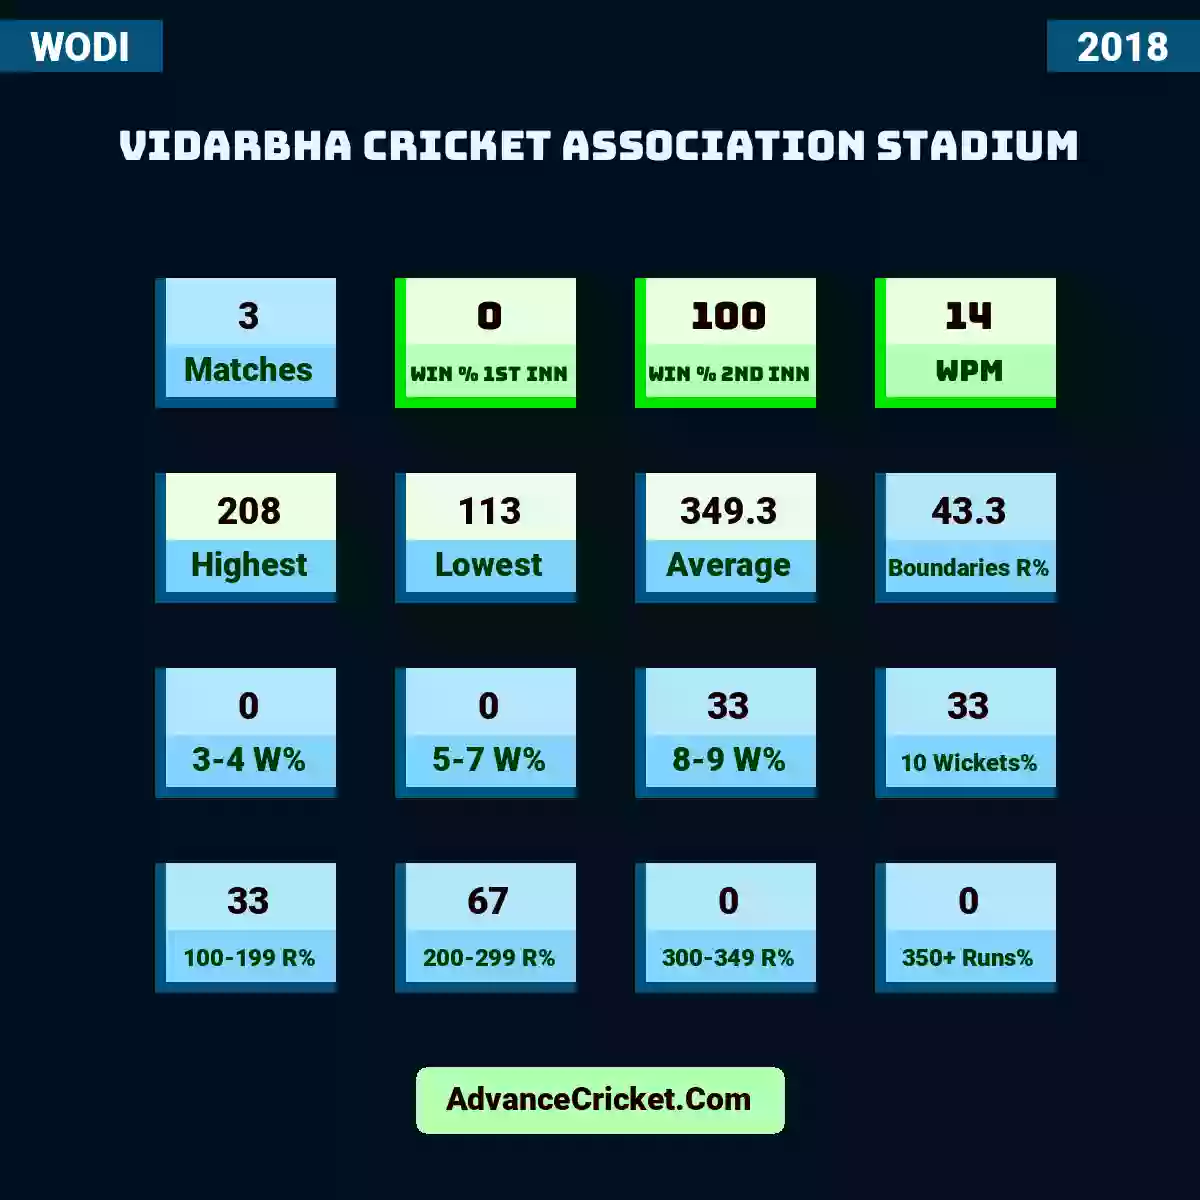 Image showing Vidarbha Cricket Association Stadium with Matches: 3, Win % 1st Inn: 0, Win % 2nd Inn: 100, WPM: 14, Highest: 208, Lowest: 113, Average: 349.3, Boundaries R%: 43.3, 3-4 W%: 0, 5-7 W%: 0, 8-9 W%: 33, 10 Wickets%: 33, 100-199 R%: 33, 200-299 R%: 67, 300-349 R%: 0, 350+ Runs%: 0.